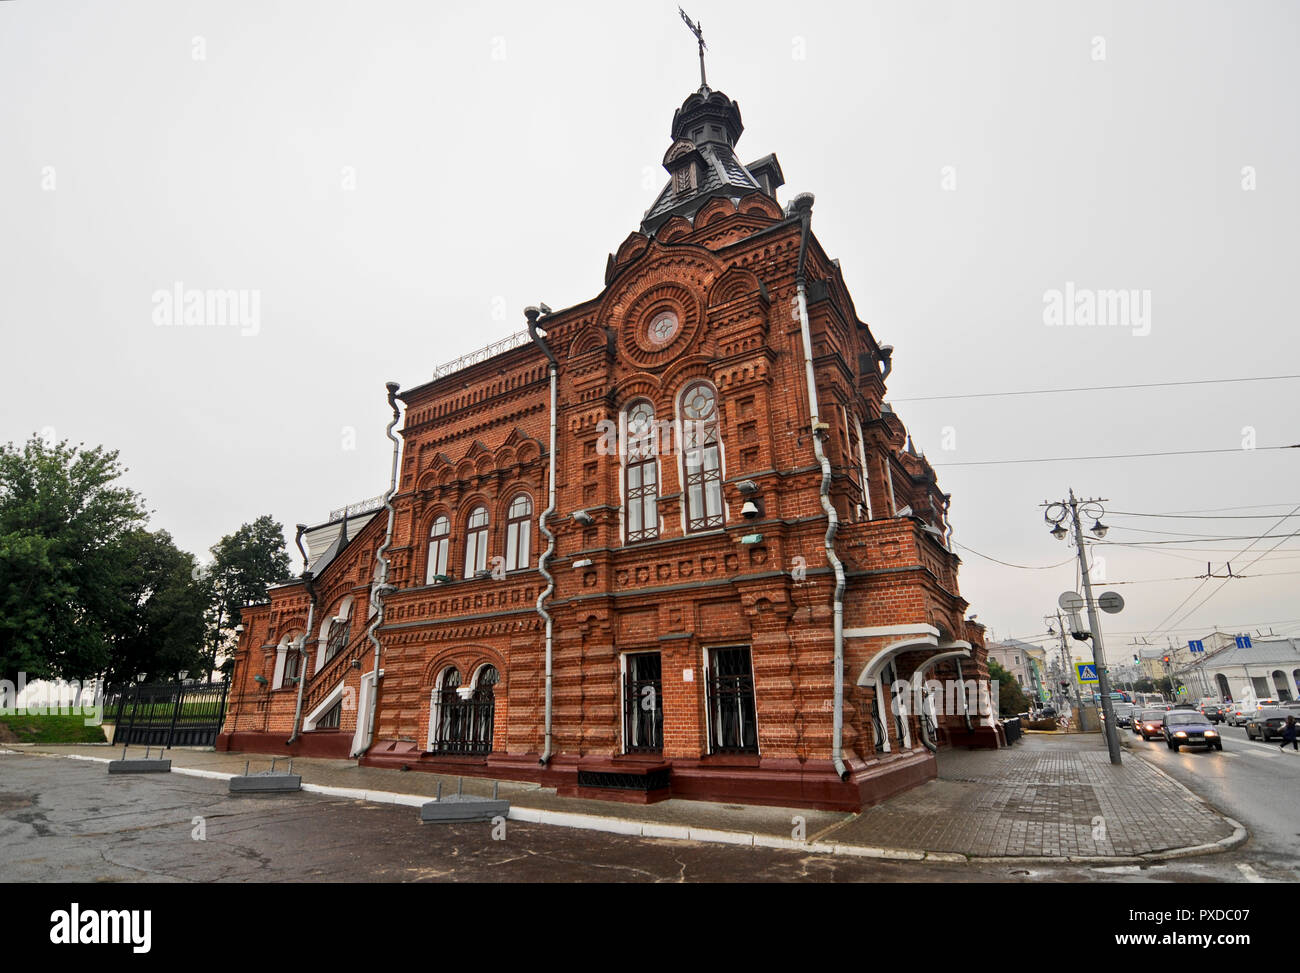 Vladimir city center, Russia Stock Photo